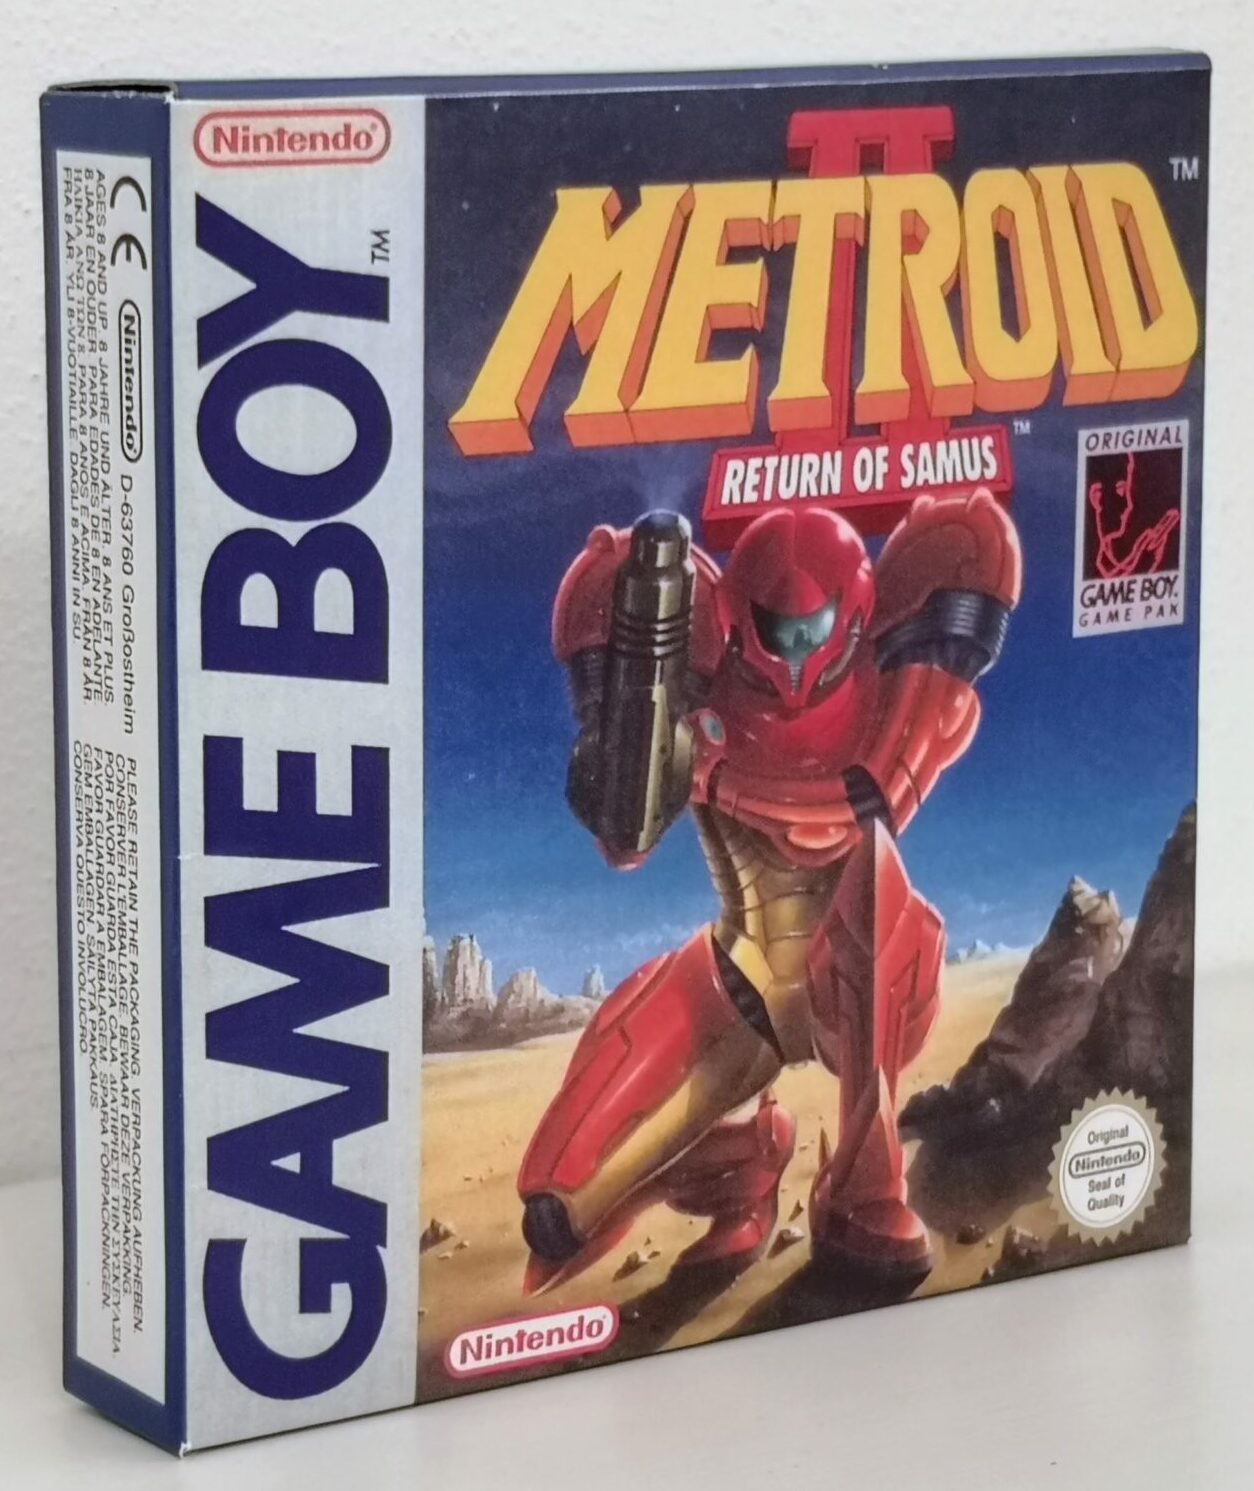 Metroid II: Return of Samus (1992 Nintendo Game Boy), vista copertina frontale